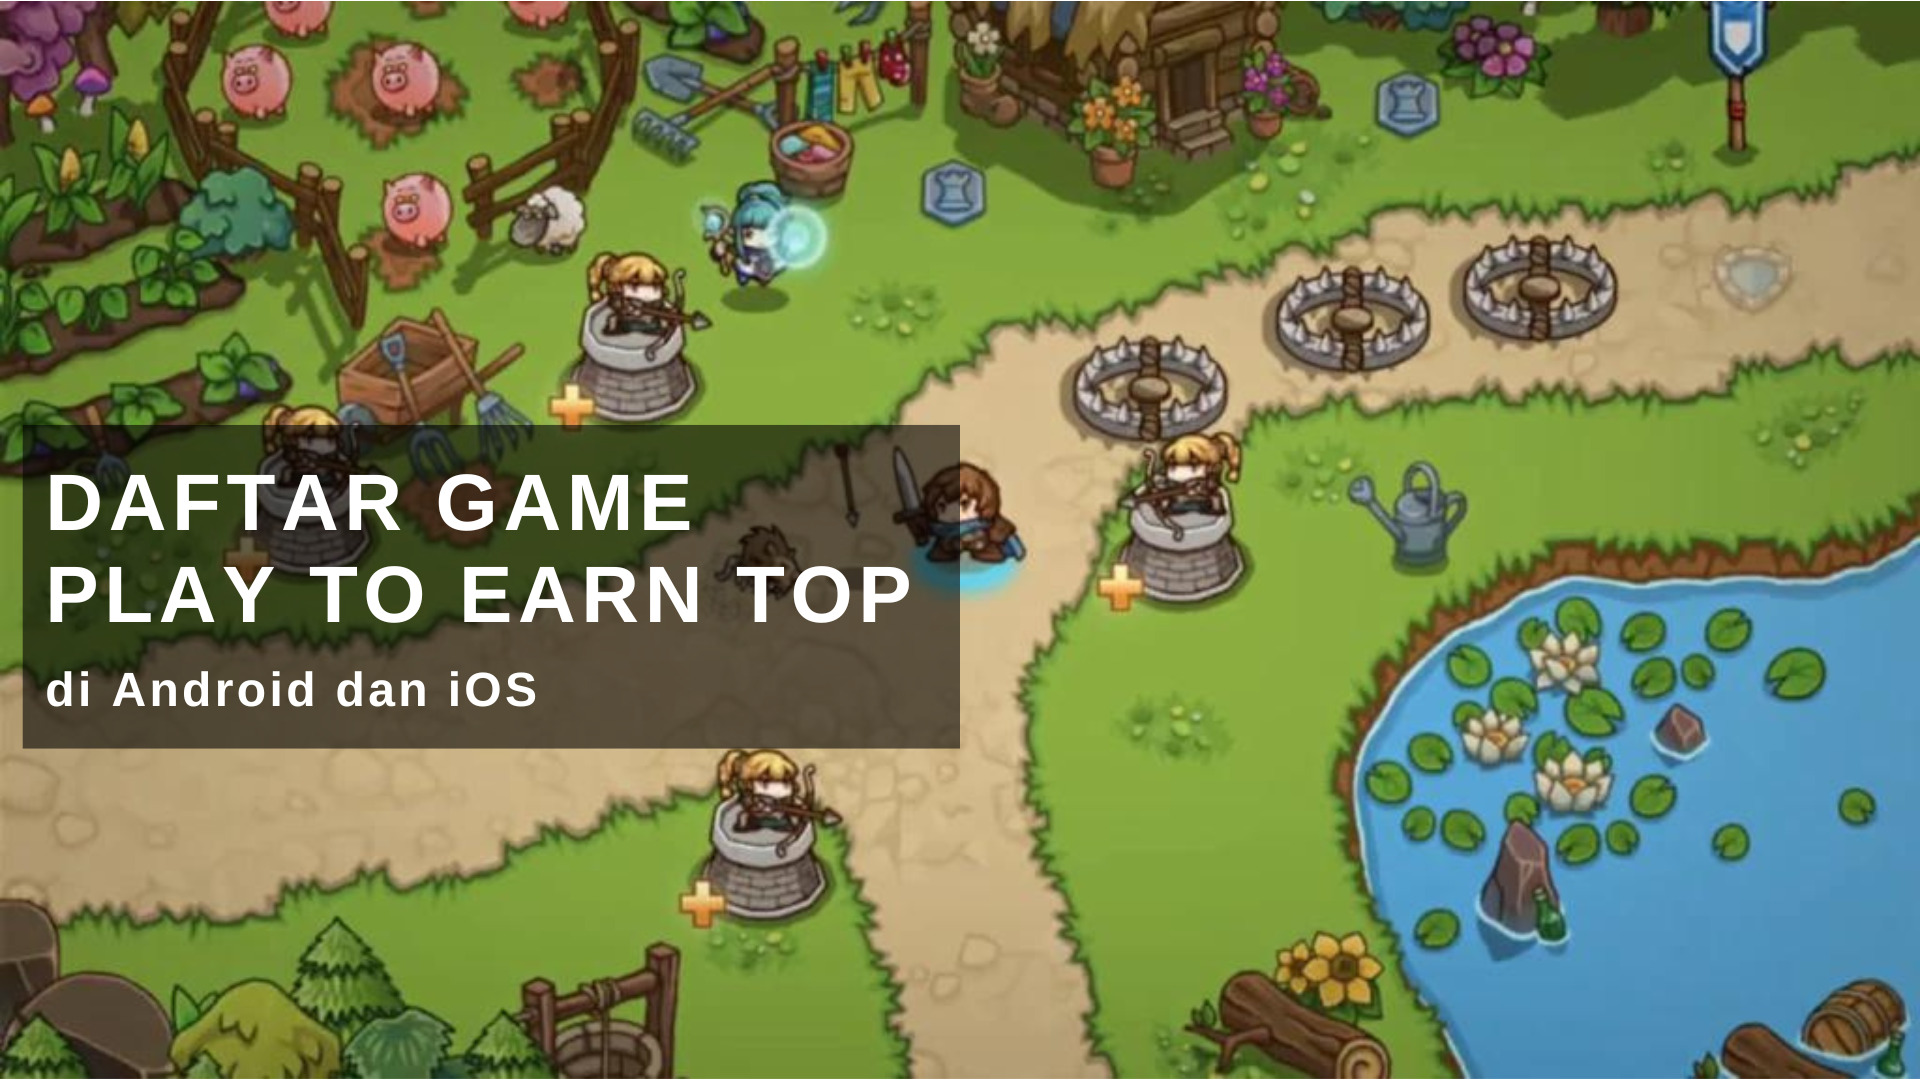 Daftar Game Play to Earn Top di Android dan iOS